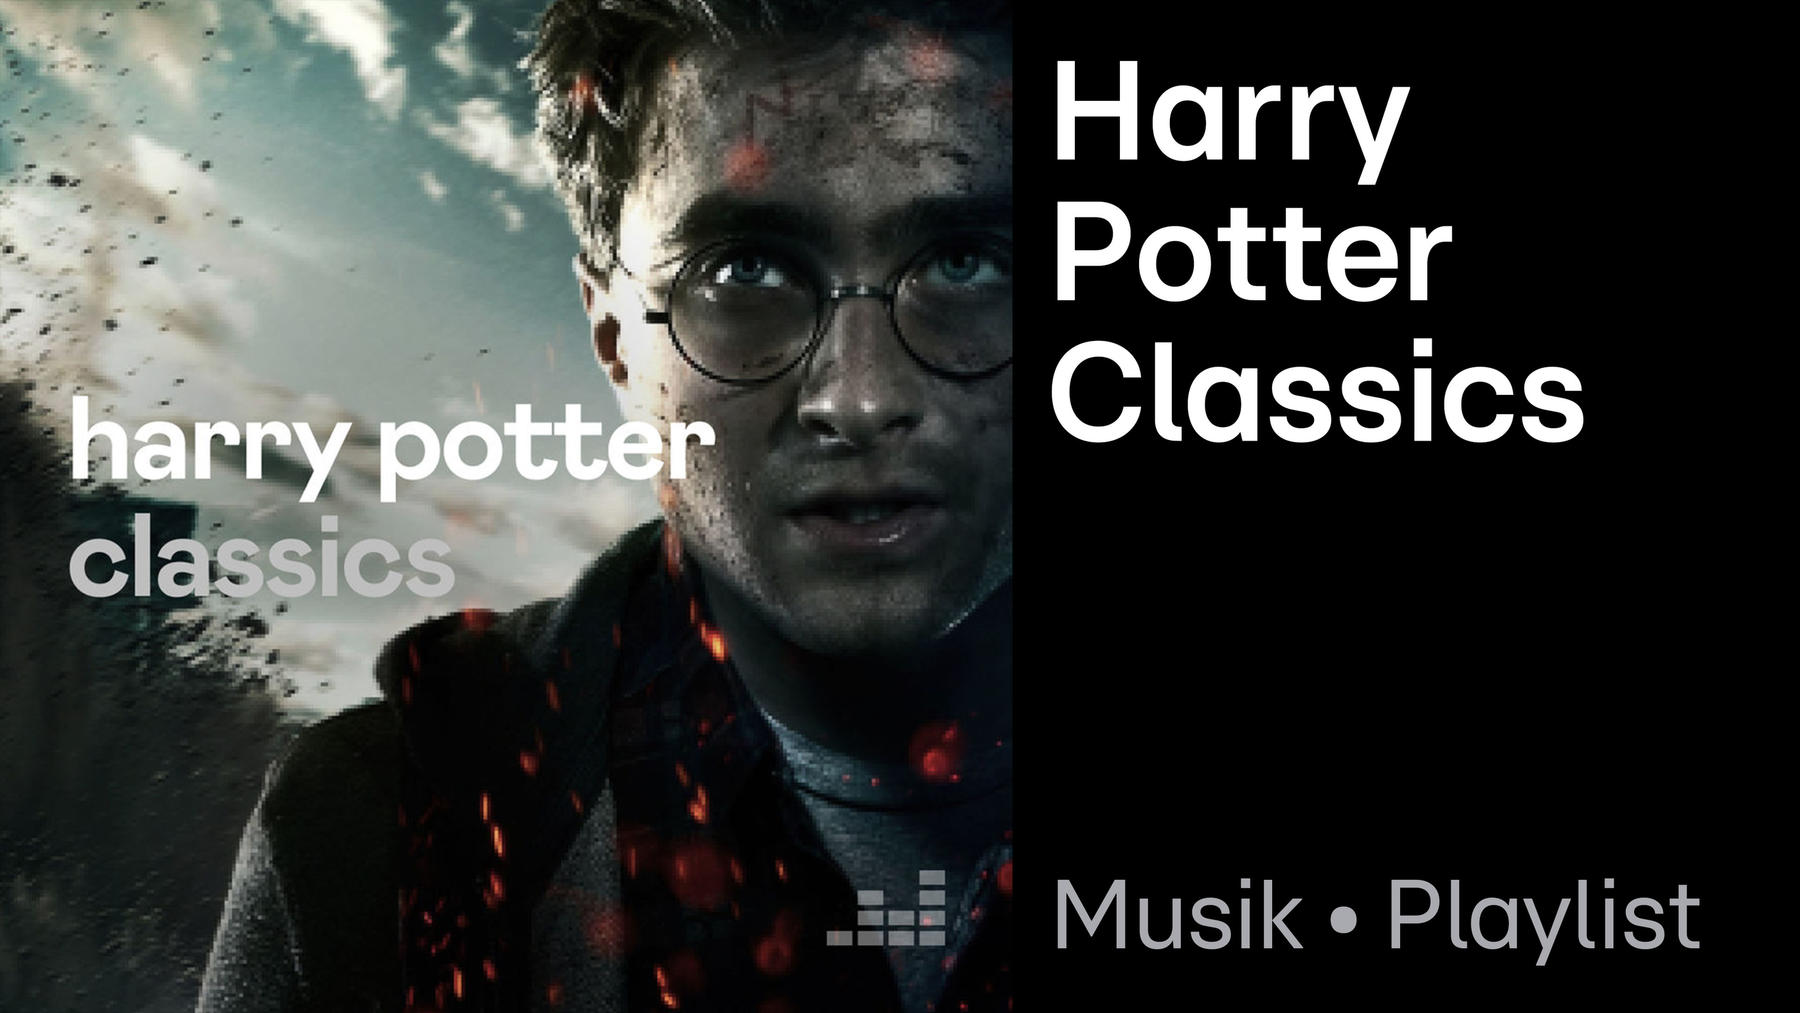 Harry Potter Classics Playlist